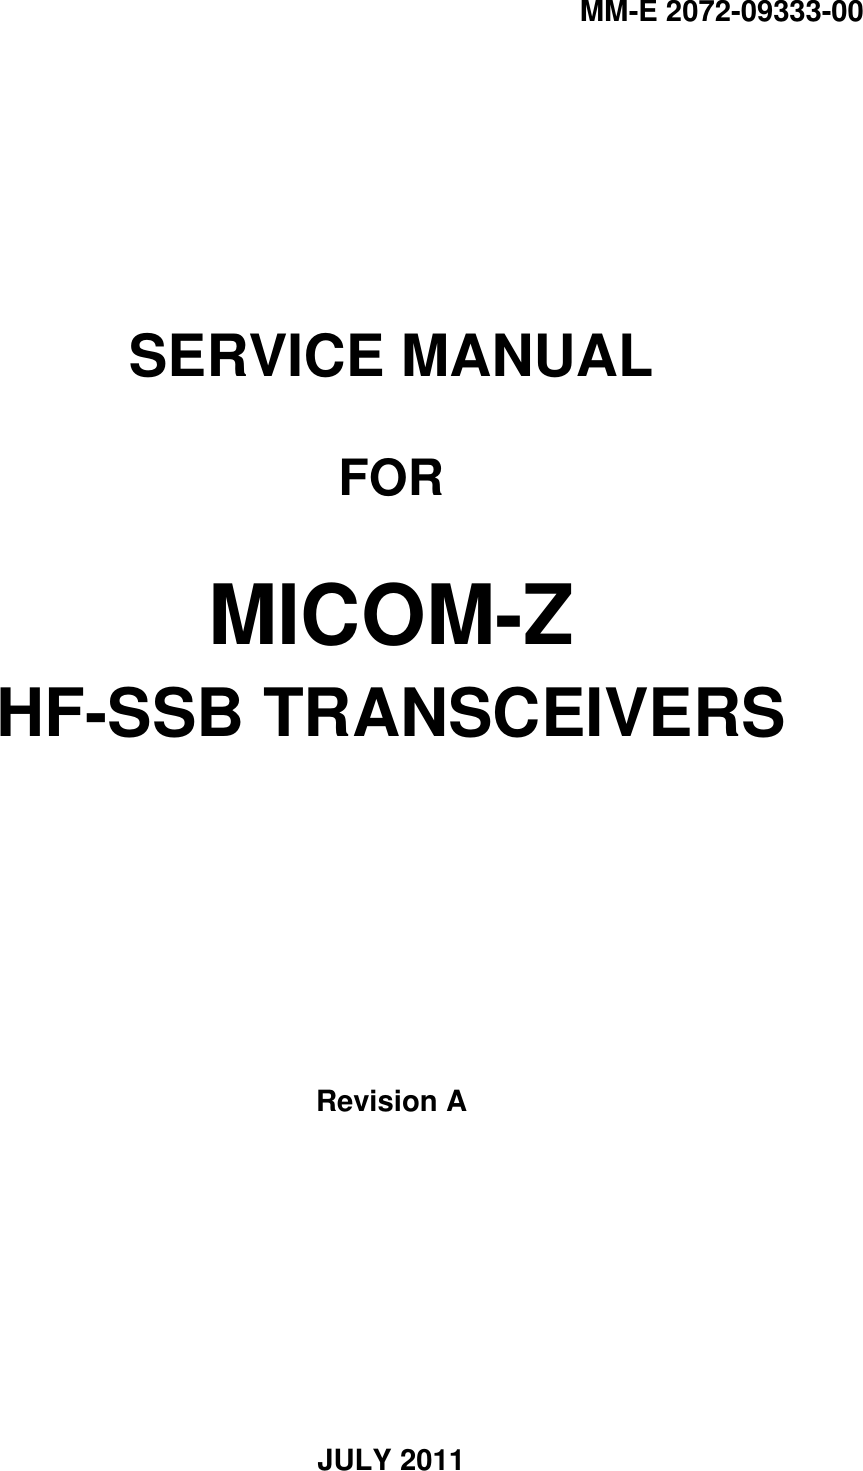 MM-E 2072-09333-00     SERVICE MANUAL  FOR  MICOM-Z HF-SSB TRANSCEIVERS      Revision A      JULY 2011  